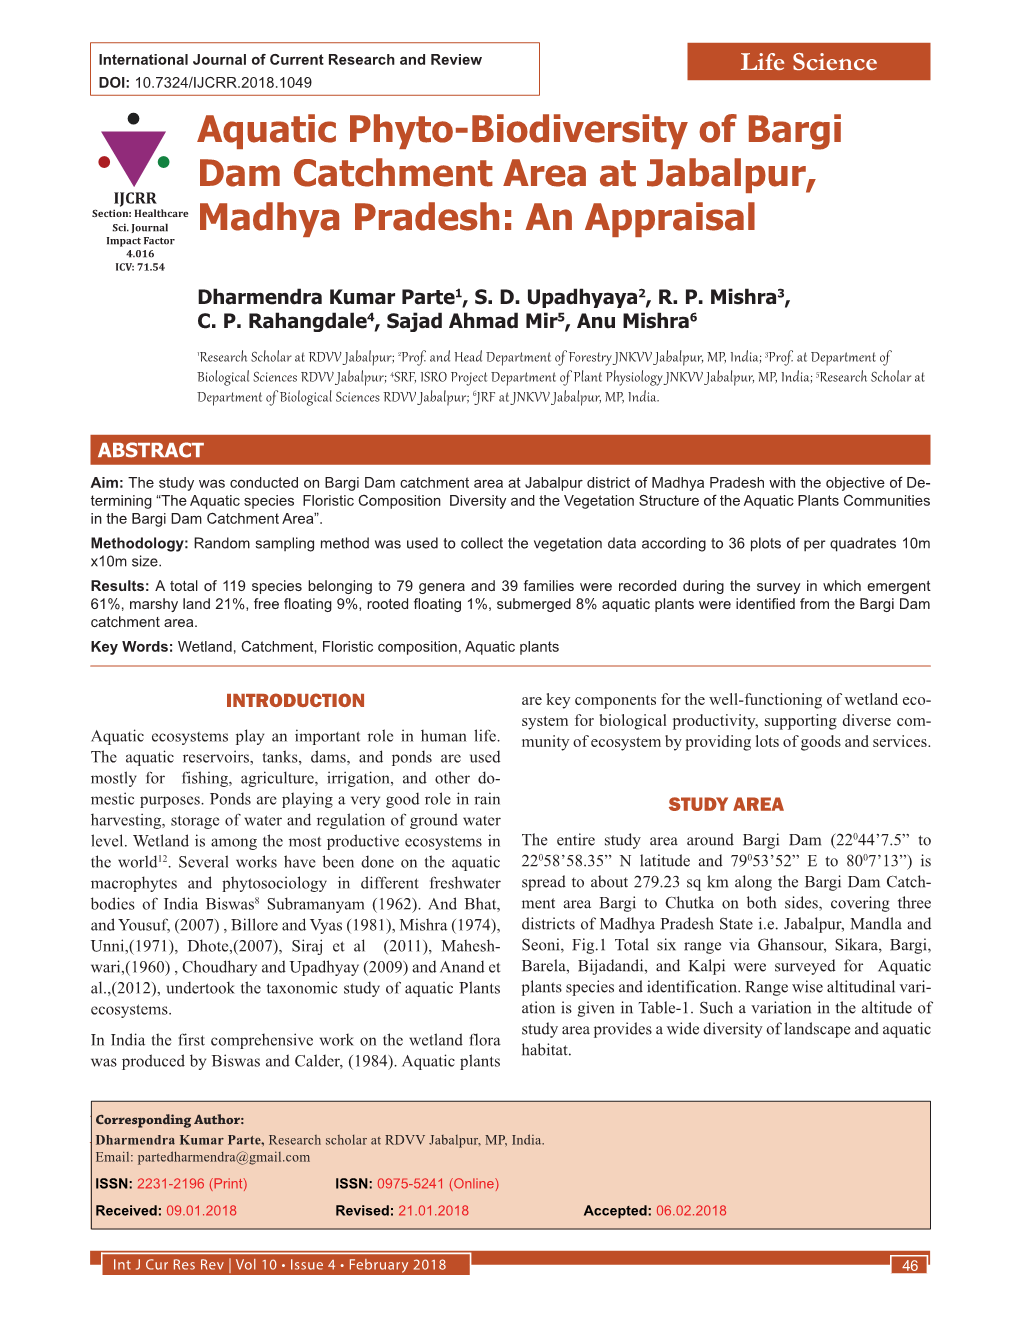 Aquatic Phyto-Biodiversity of Bargi Dam Catchment Area at Jabalpur, IJCRR Section: Healthcare Sci